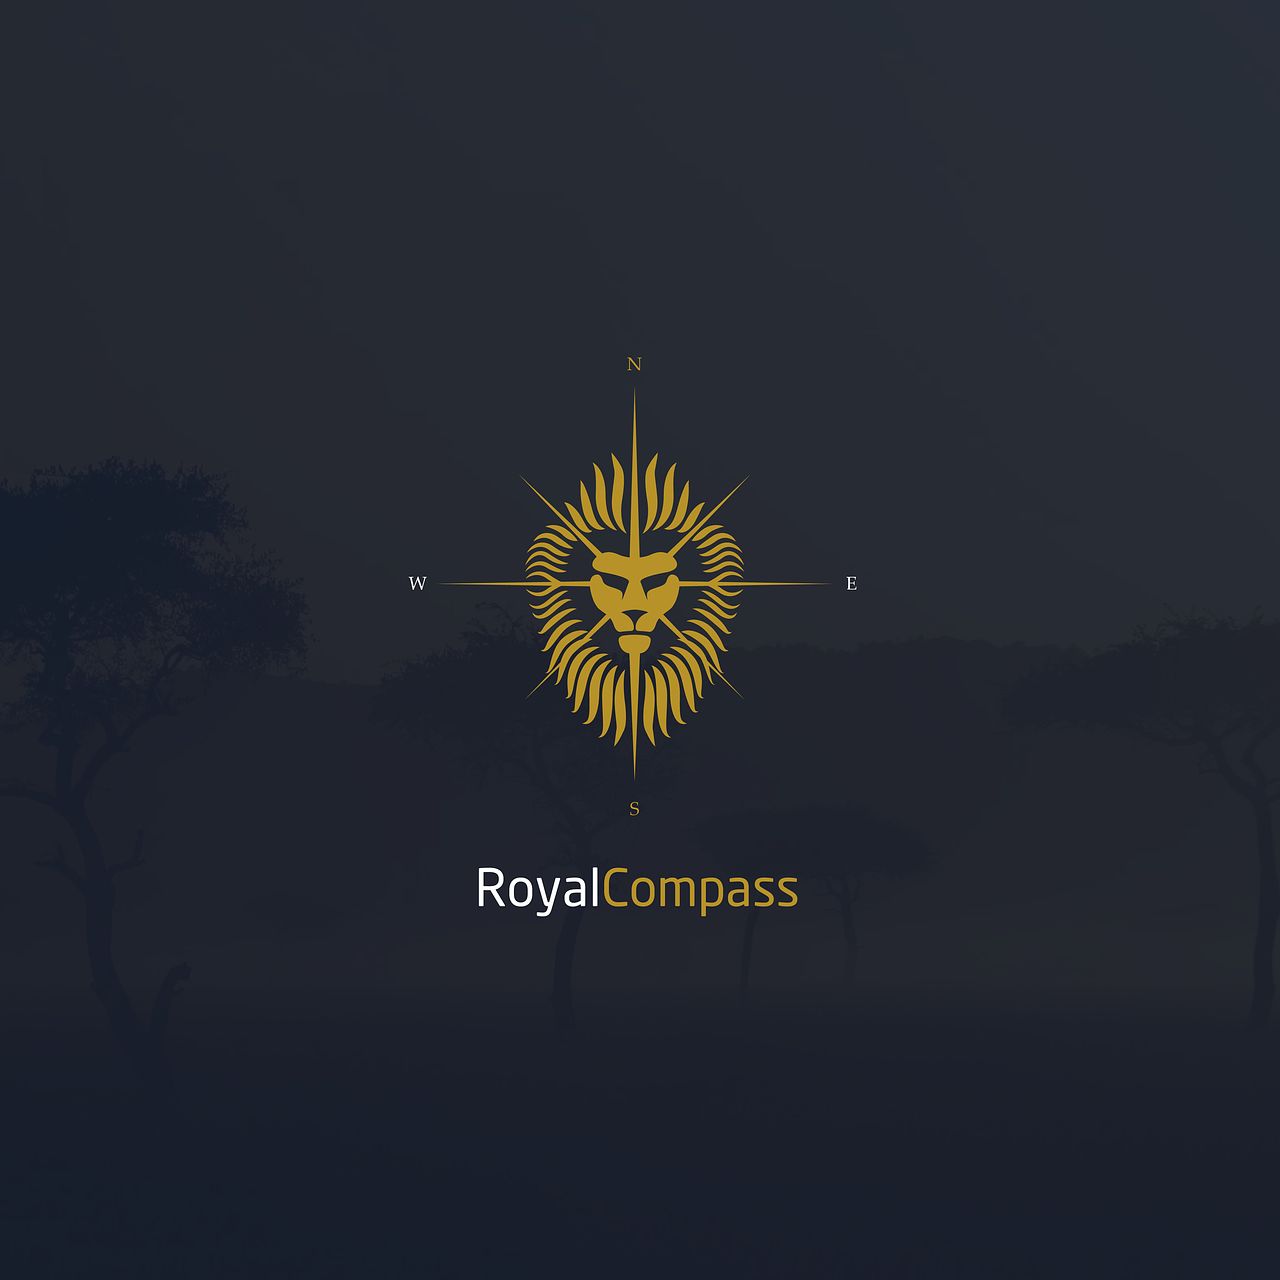 Royal Compass